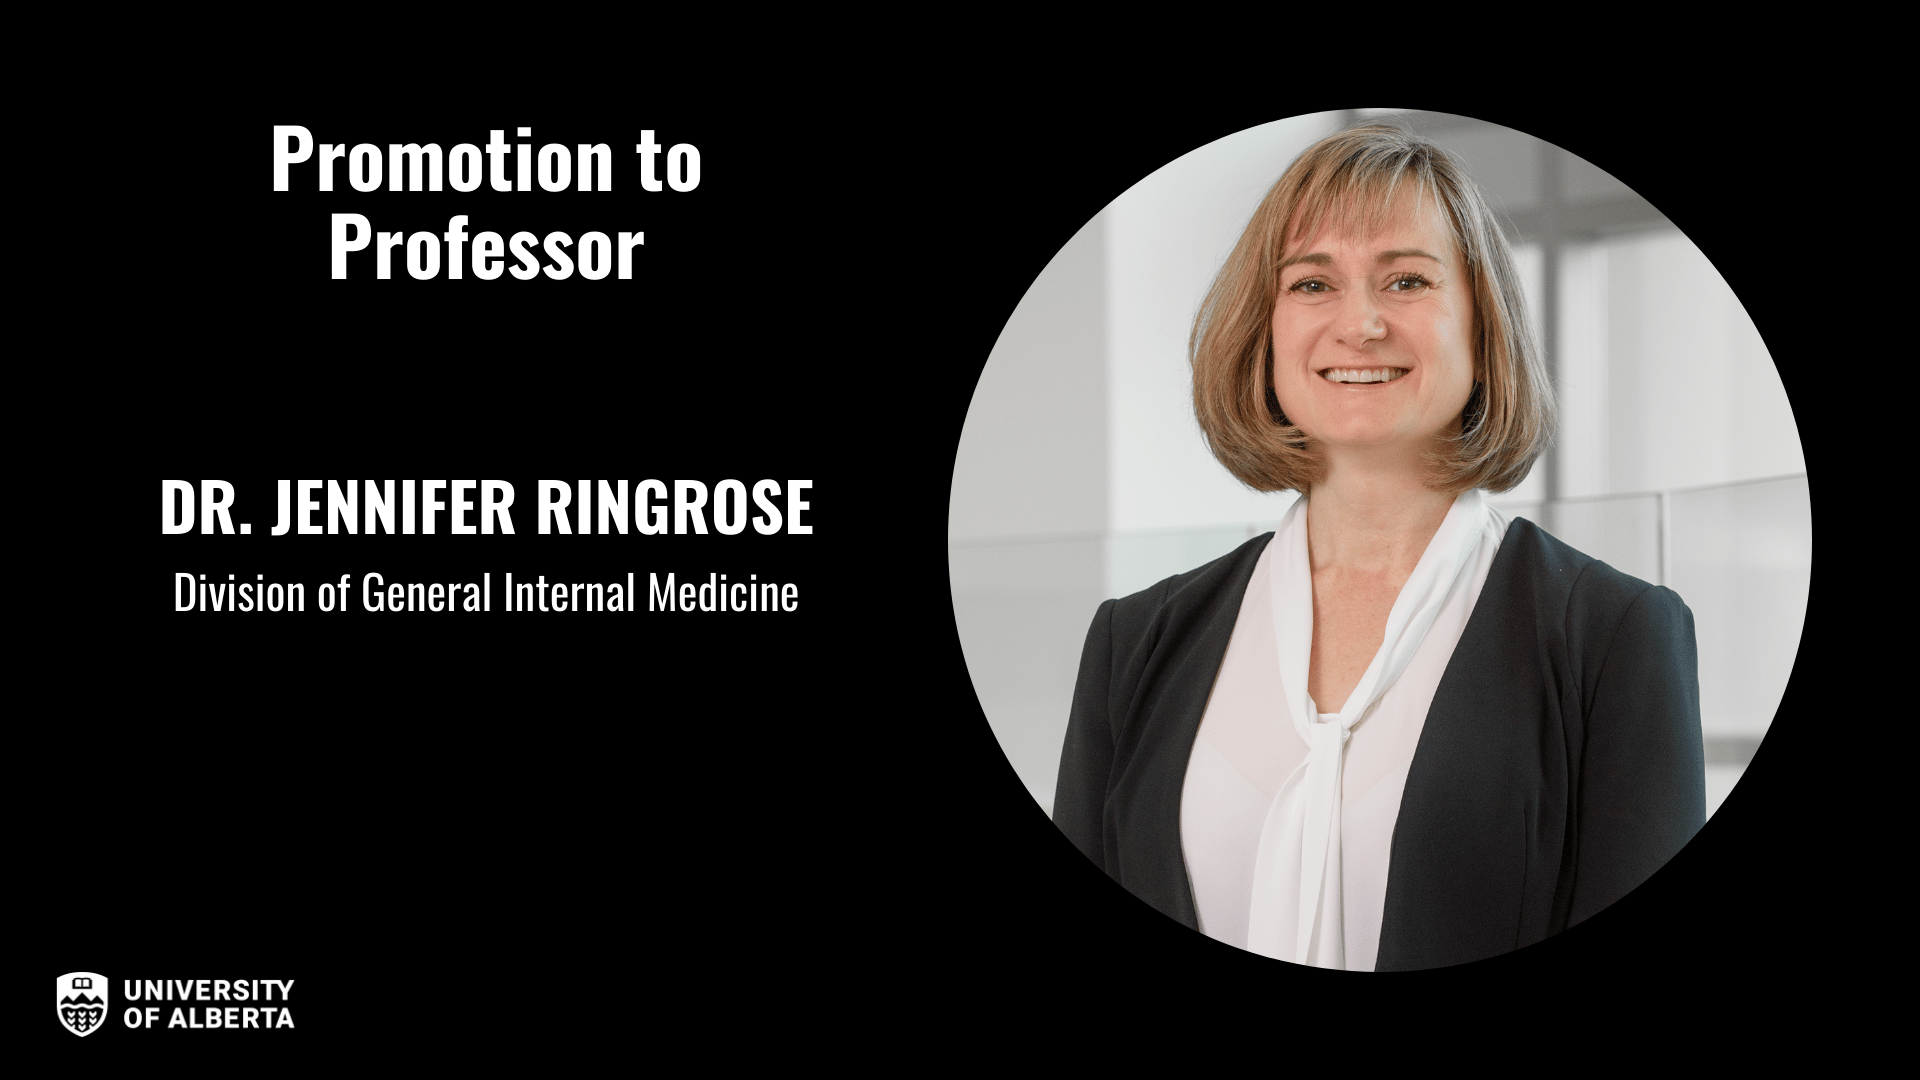 Dr. Jennifer Ringrose